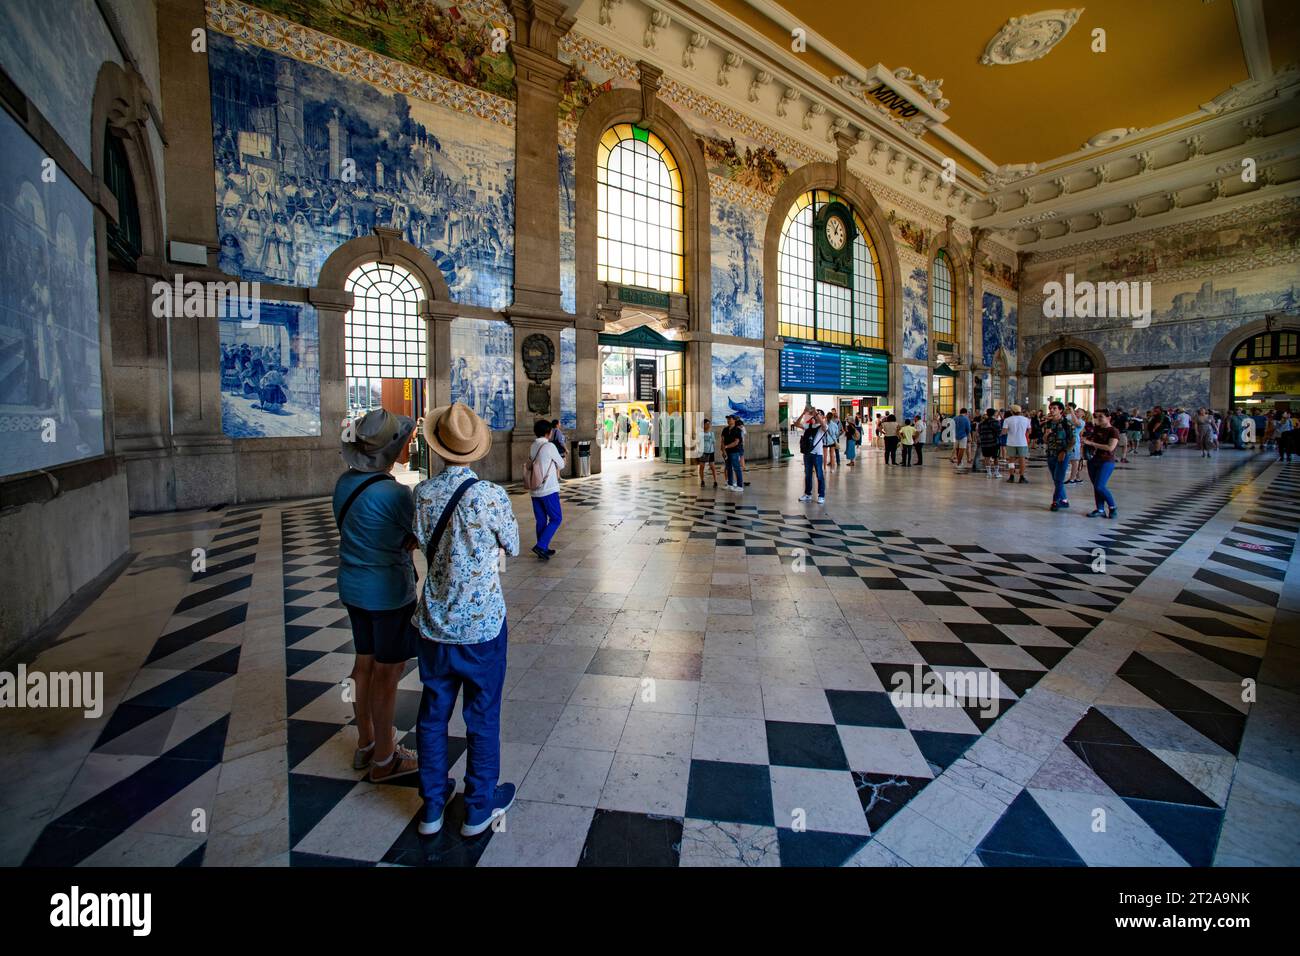 Azulejos at Estacao de Sao Bento, Train Station, Porto, Portugal Stock Photo